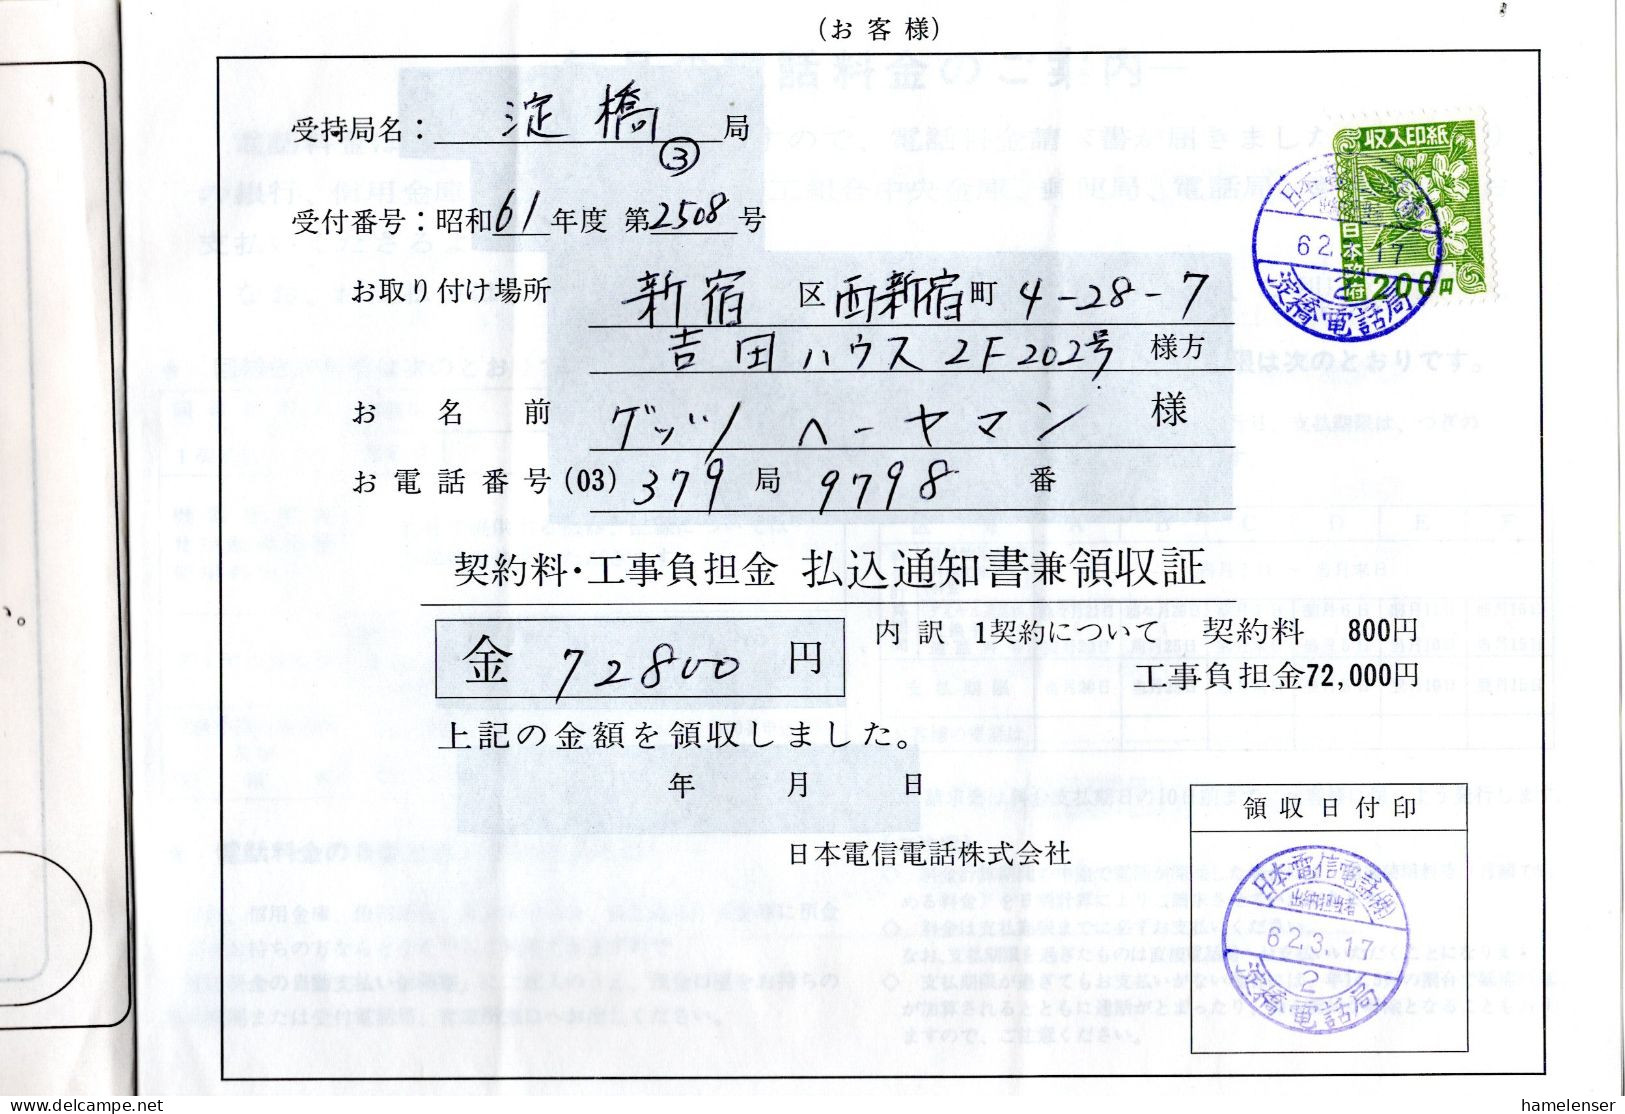 L65575 - Japan - 1987 - ¥200 Stempelmarke EF A Fernmeldevertragsgrundgebuehrquittung, NTT-Filiale Yodobashi, Tokyo - Cachets Généralité